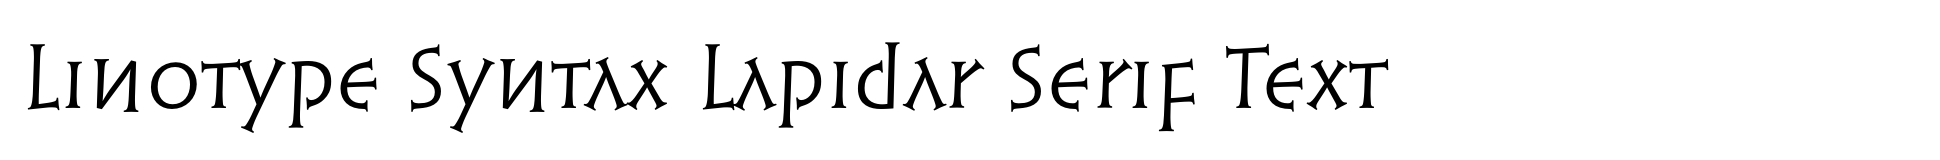 Linotype Syntax Lapidar Serif Text